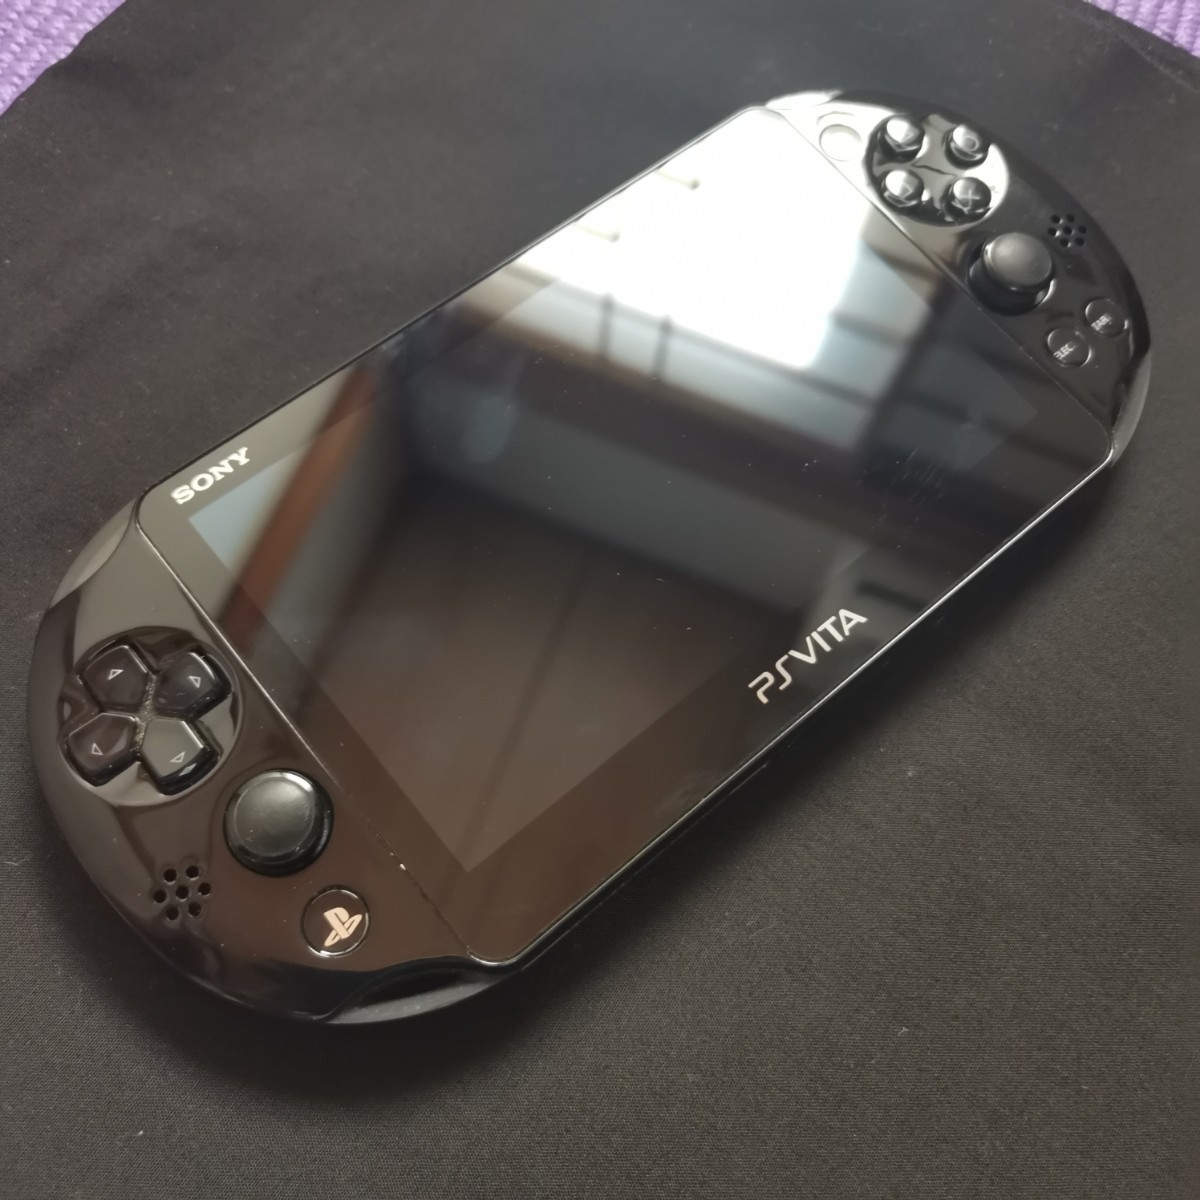 PCH-2000 PS Vita Wi-Fiモデル SONY PlayStation Vita BLACK